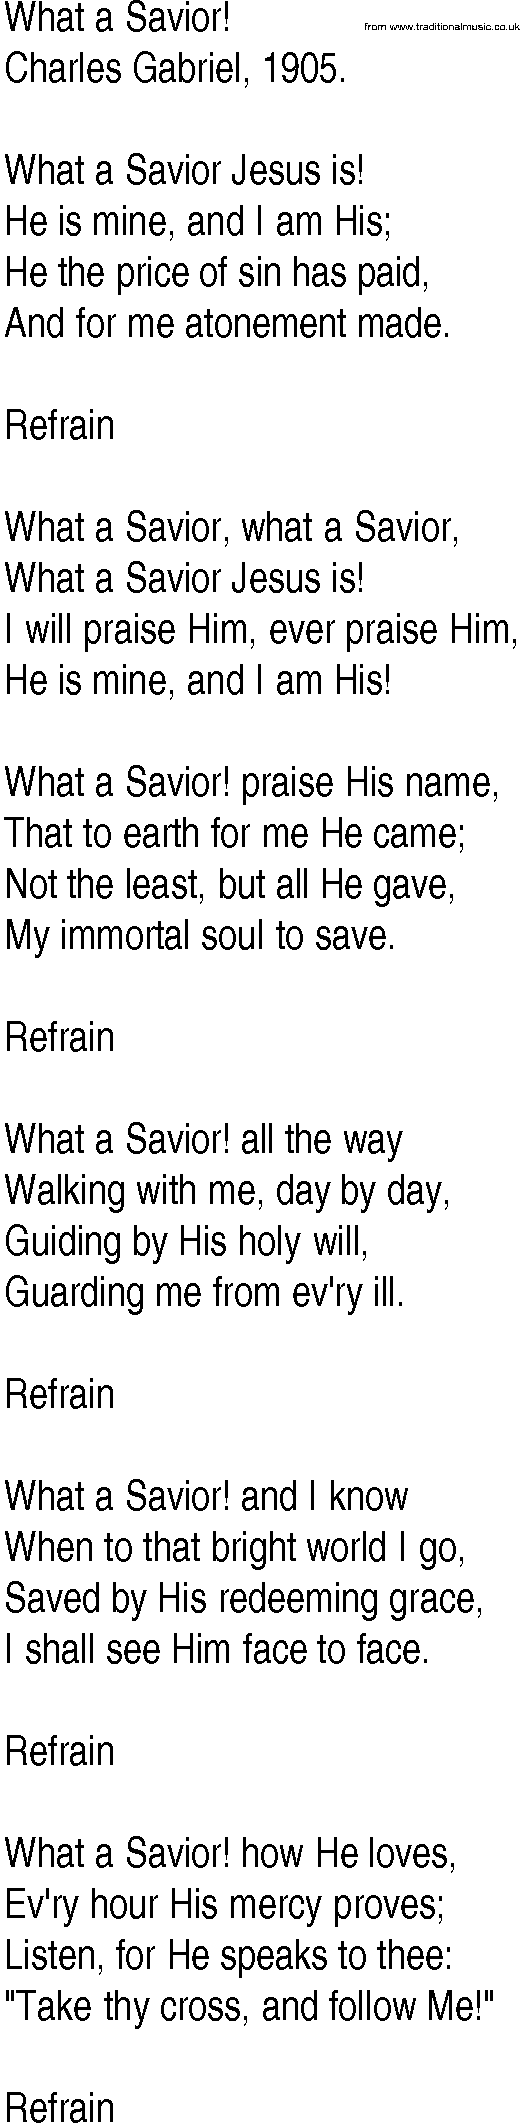 Hymn and Gospel Song: What a Savior! by Charles Gabriel lyrics